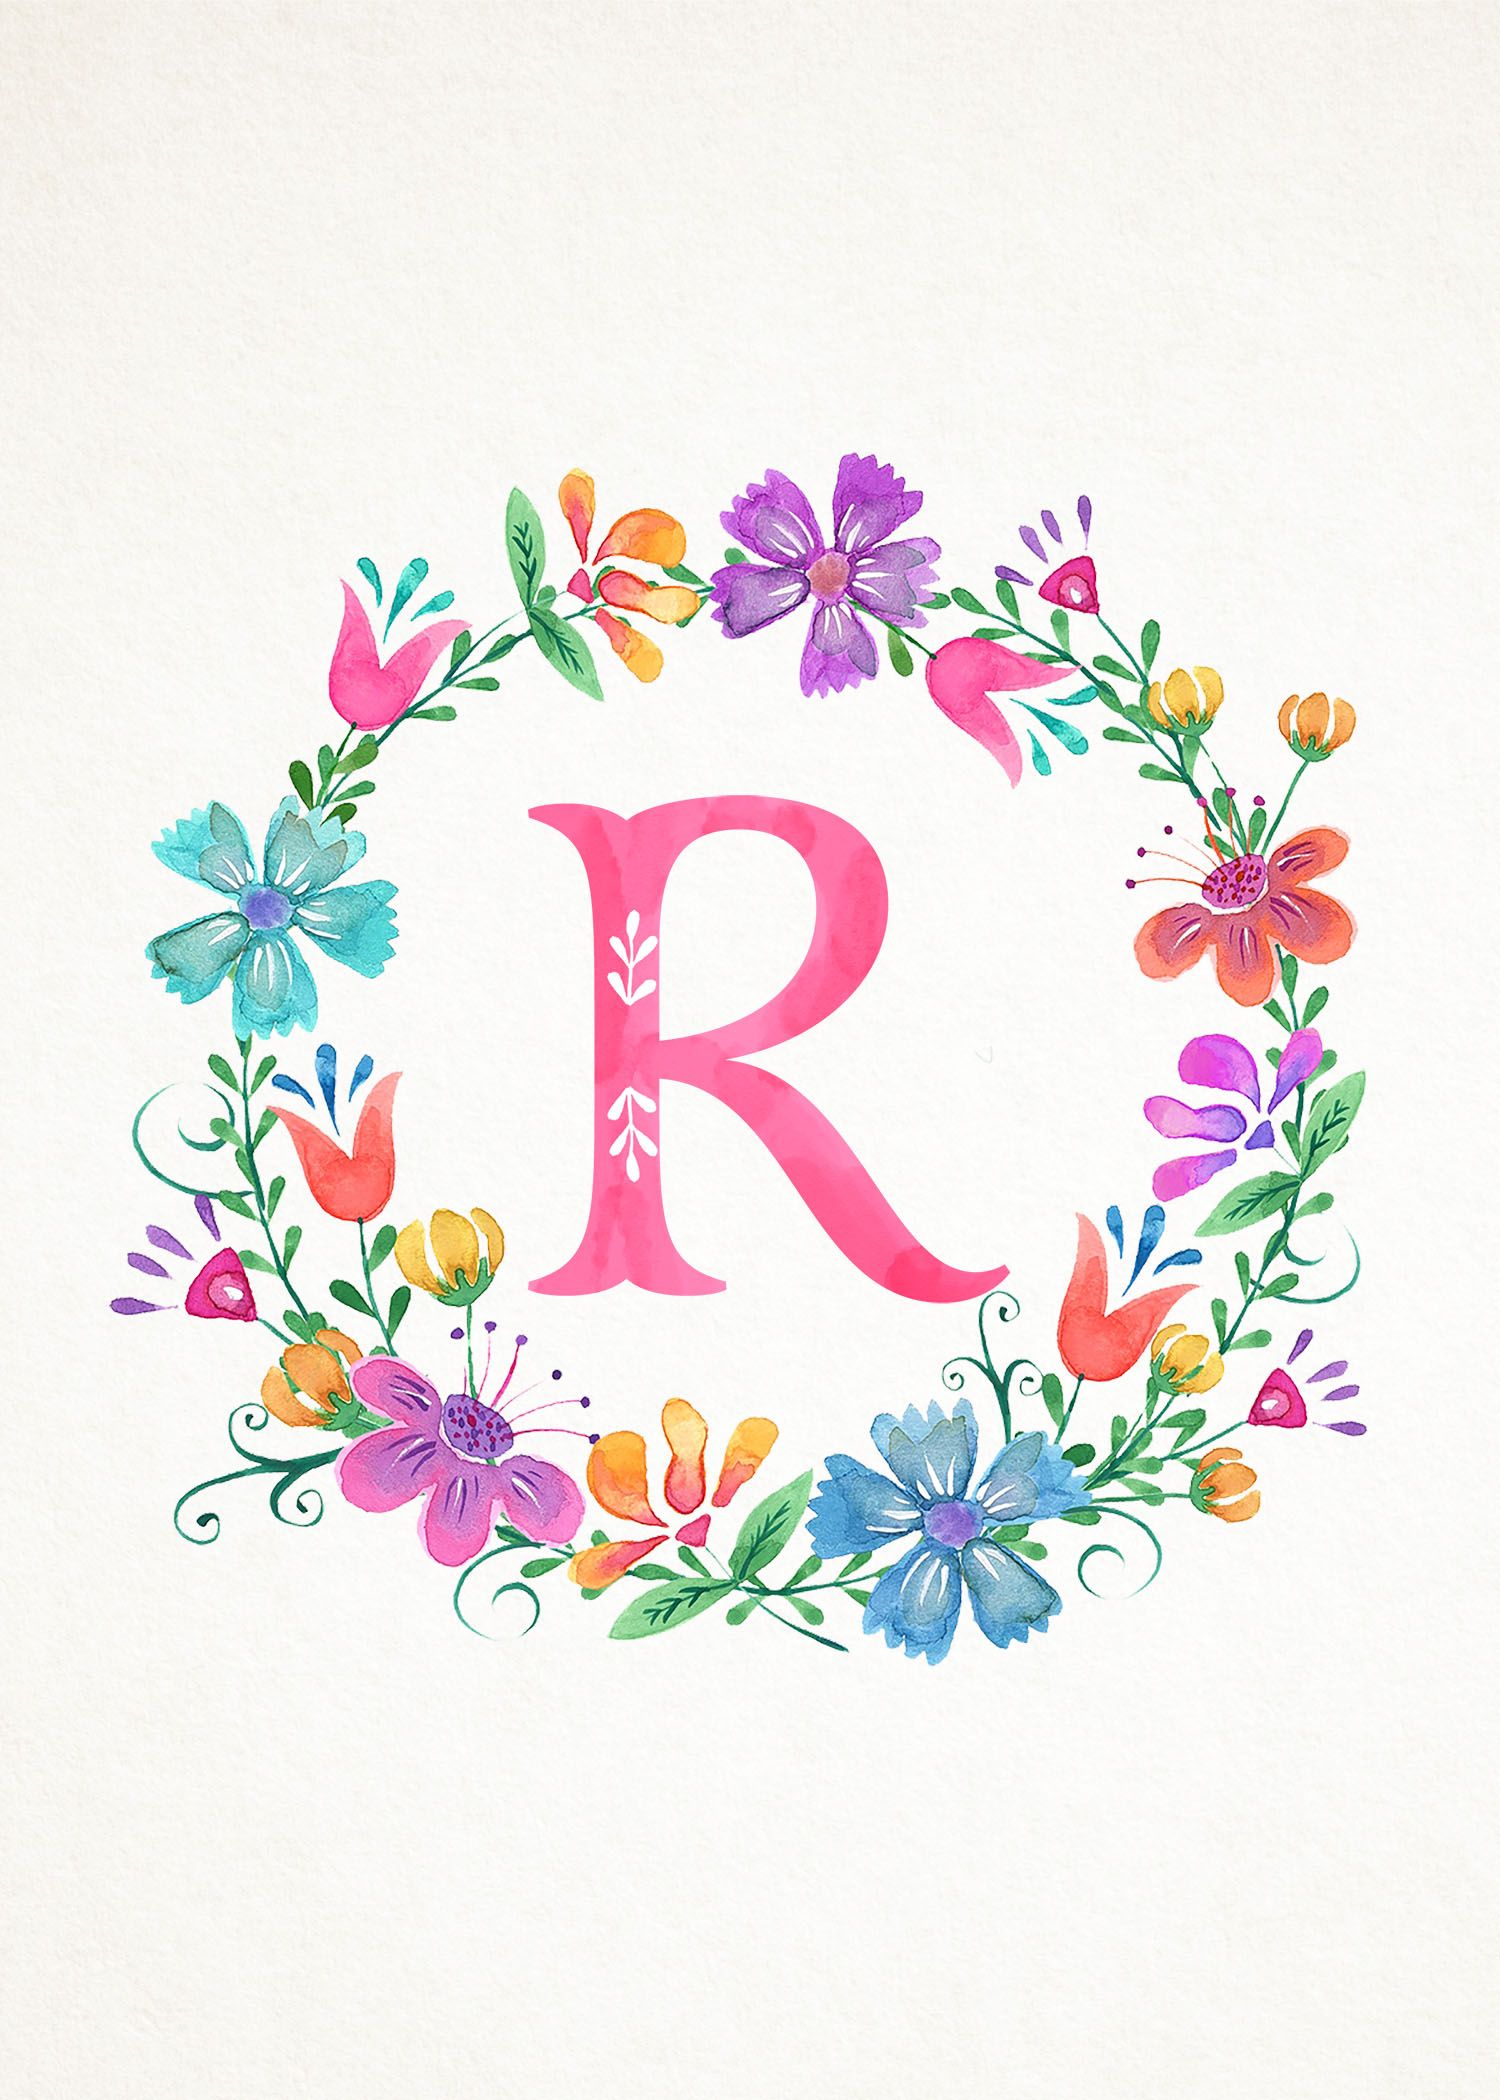 Letras com flores, Imagem floral, Wallpaper bonitos